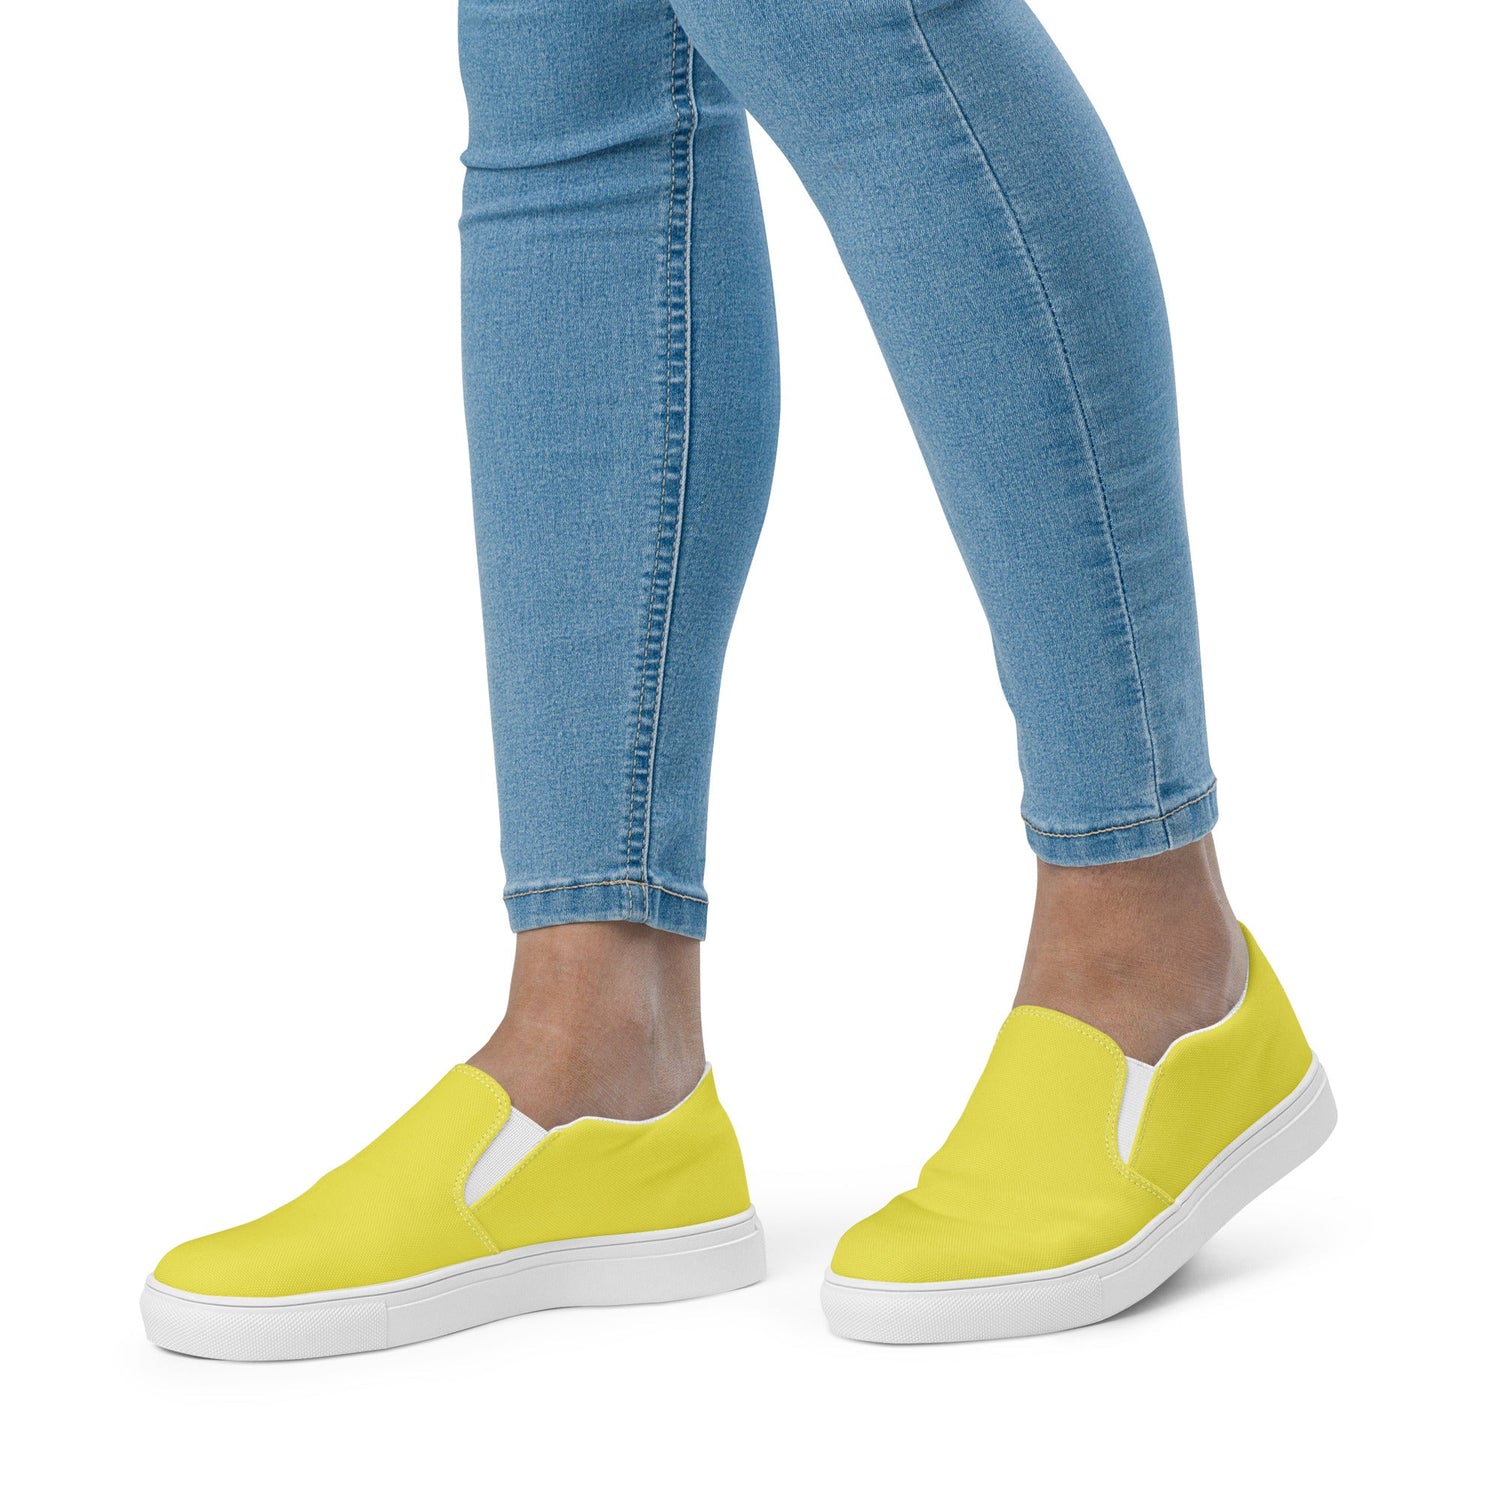 klasneakers Women’s slip-on canvas shoes - Yellow